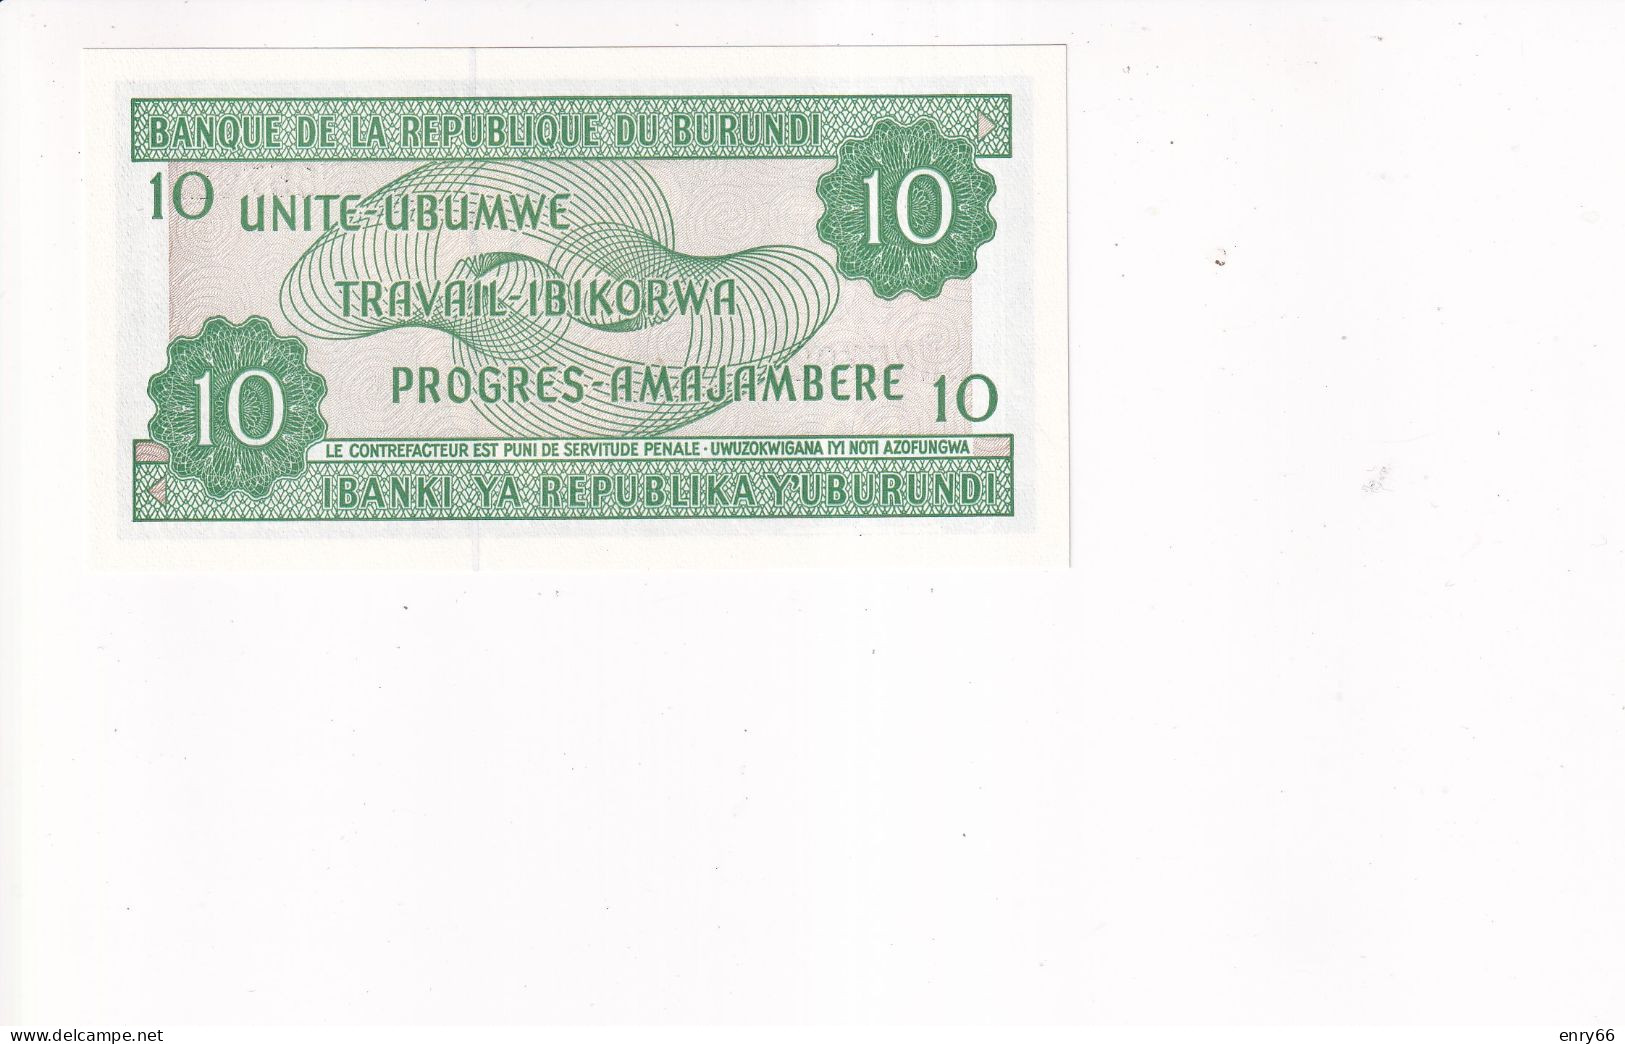 BURUNDI 10 FRANCS 2005 P33E UNC - Burundi